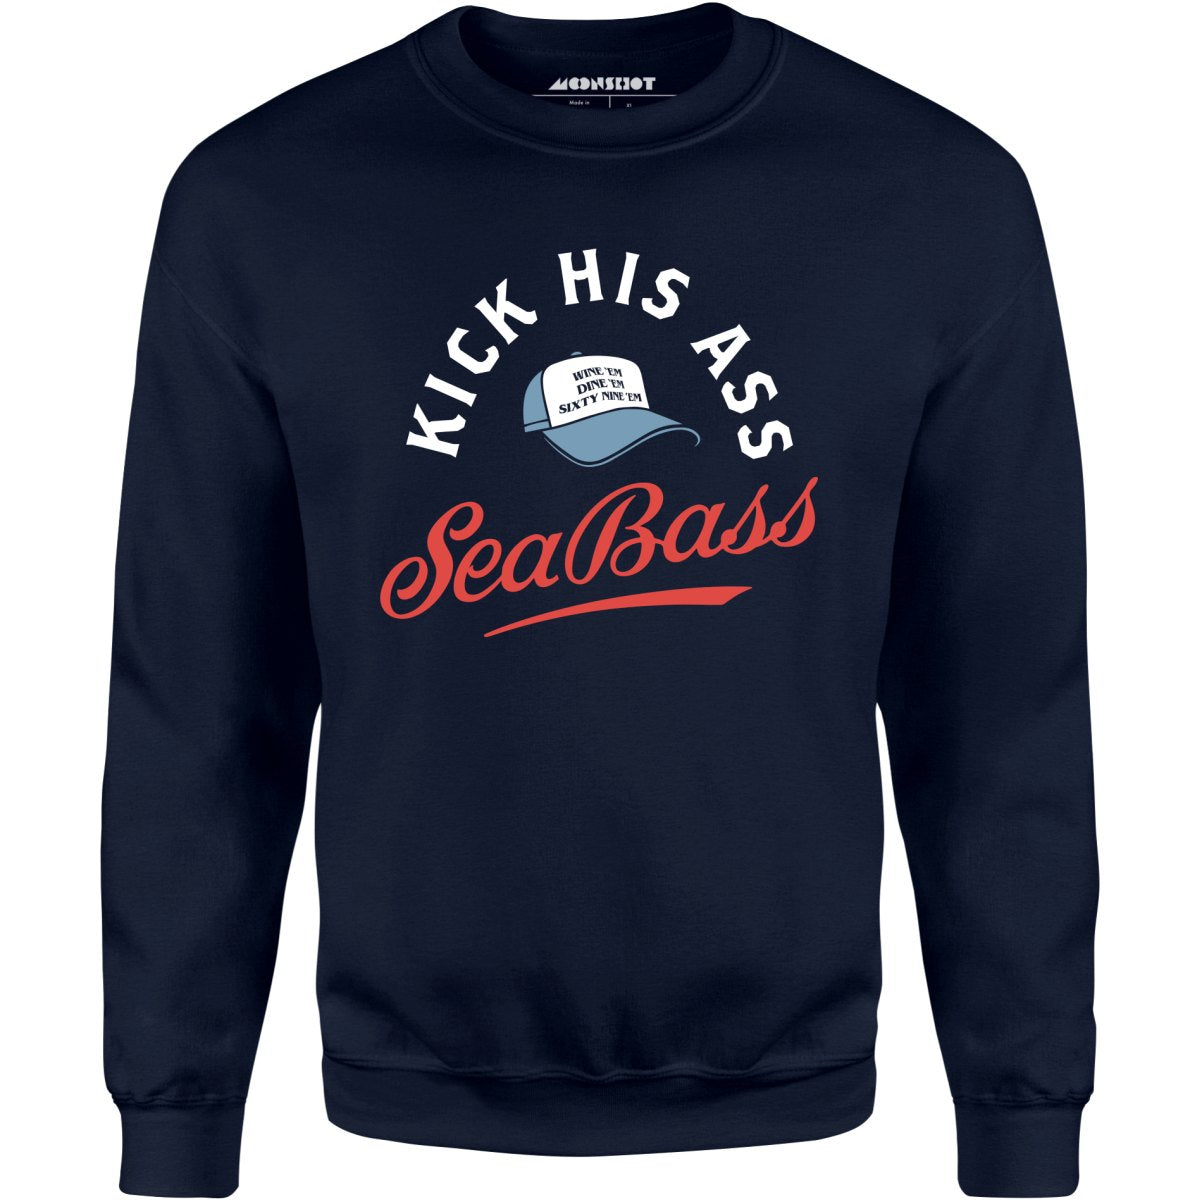 Kick His Ass Sea Bass - Unisex Sweatshirt